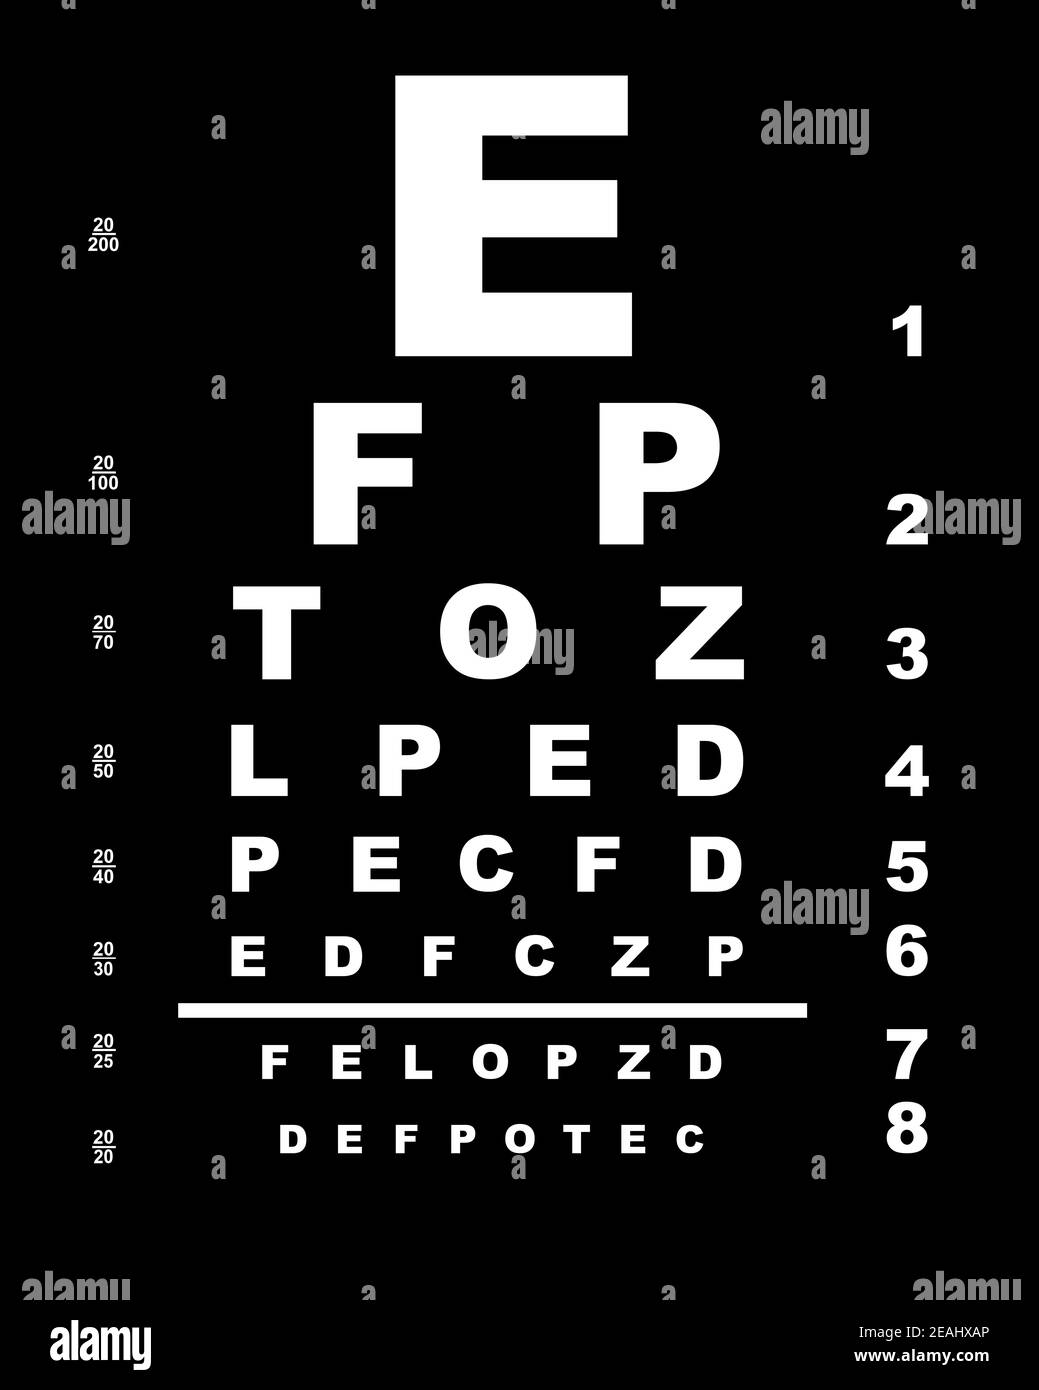 Eye Chart Print : Vintage Eye Charts Letters Vintage Eye Chart Art